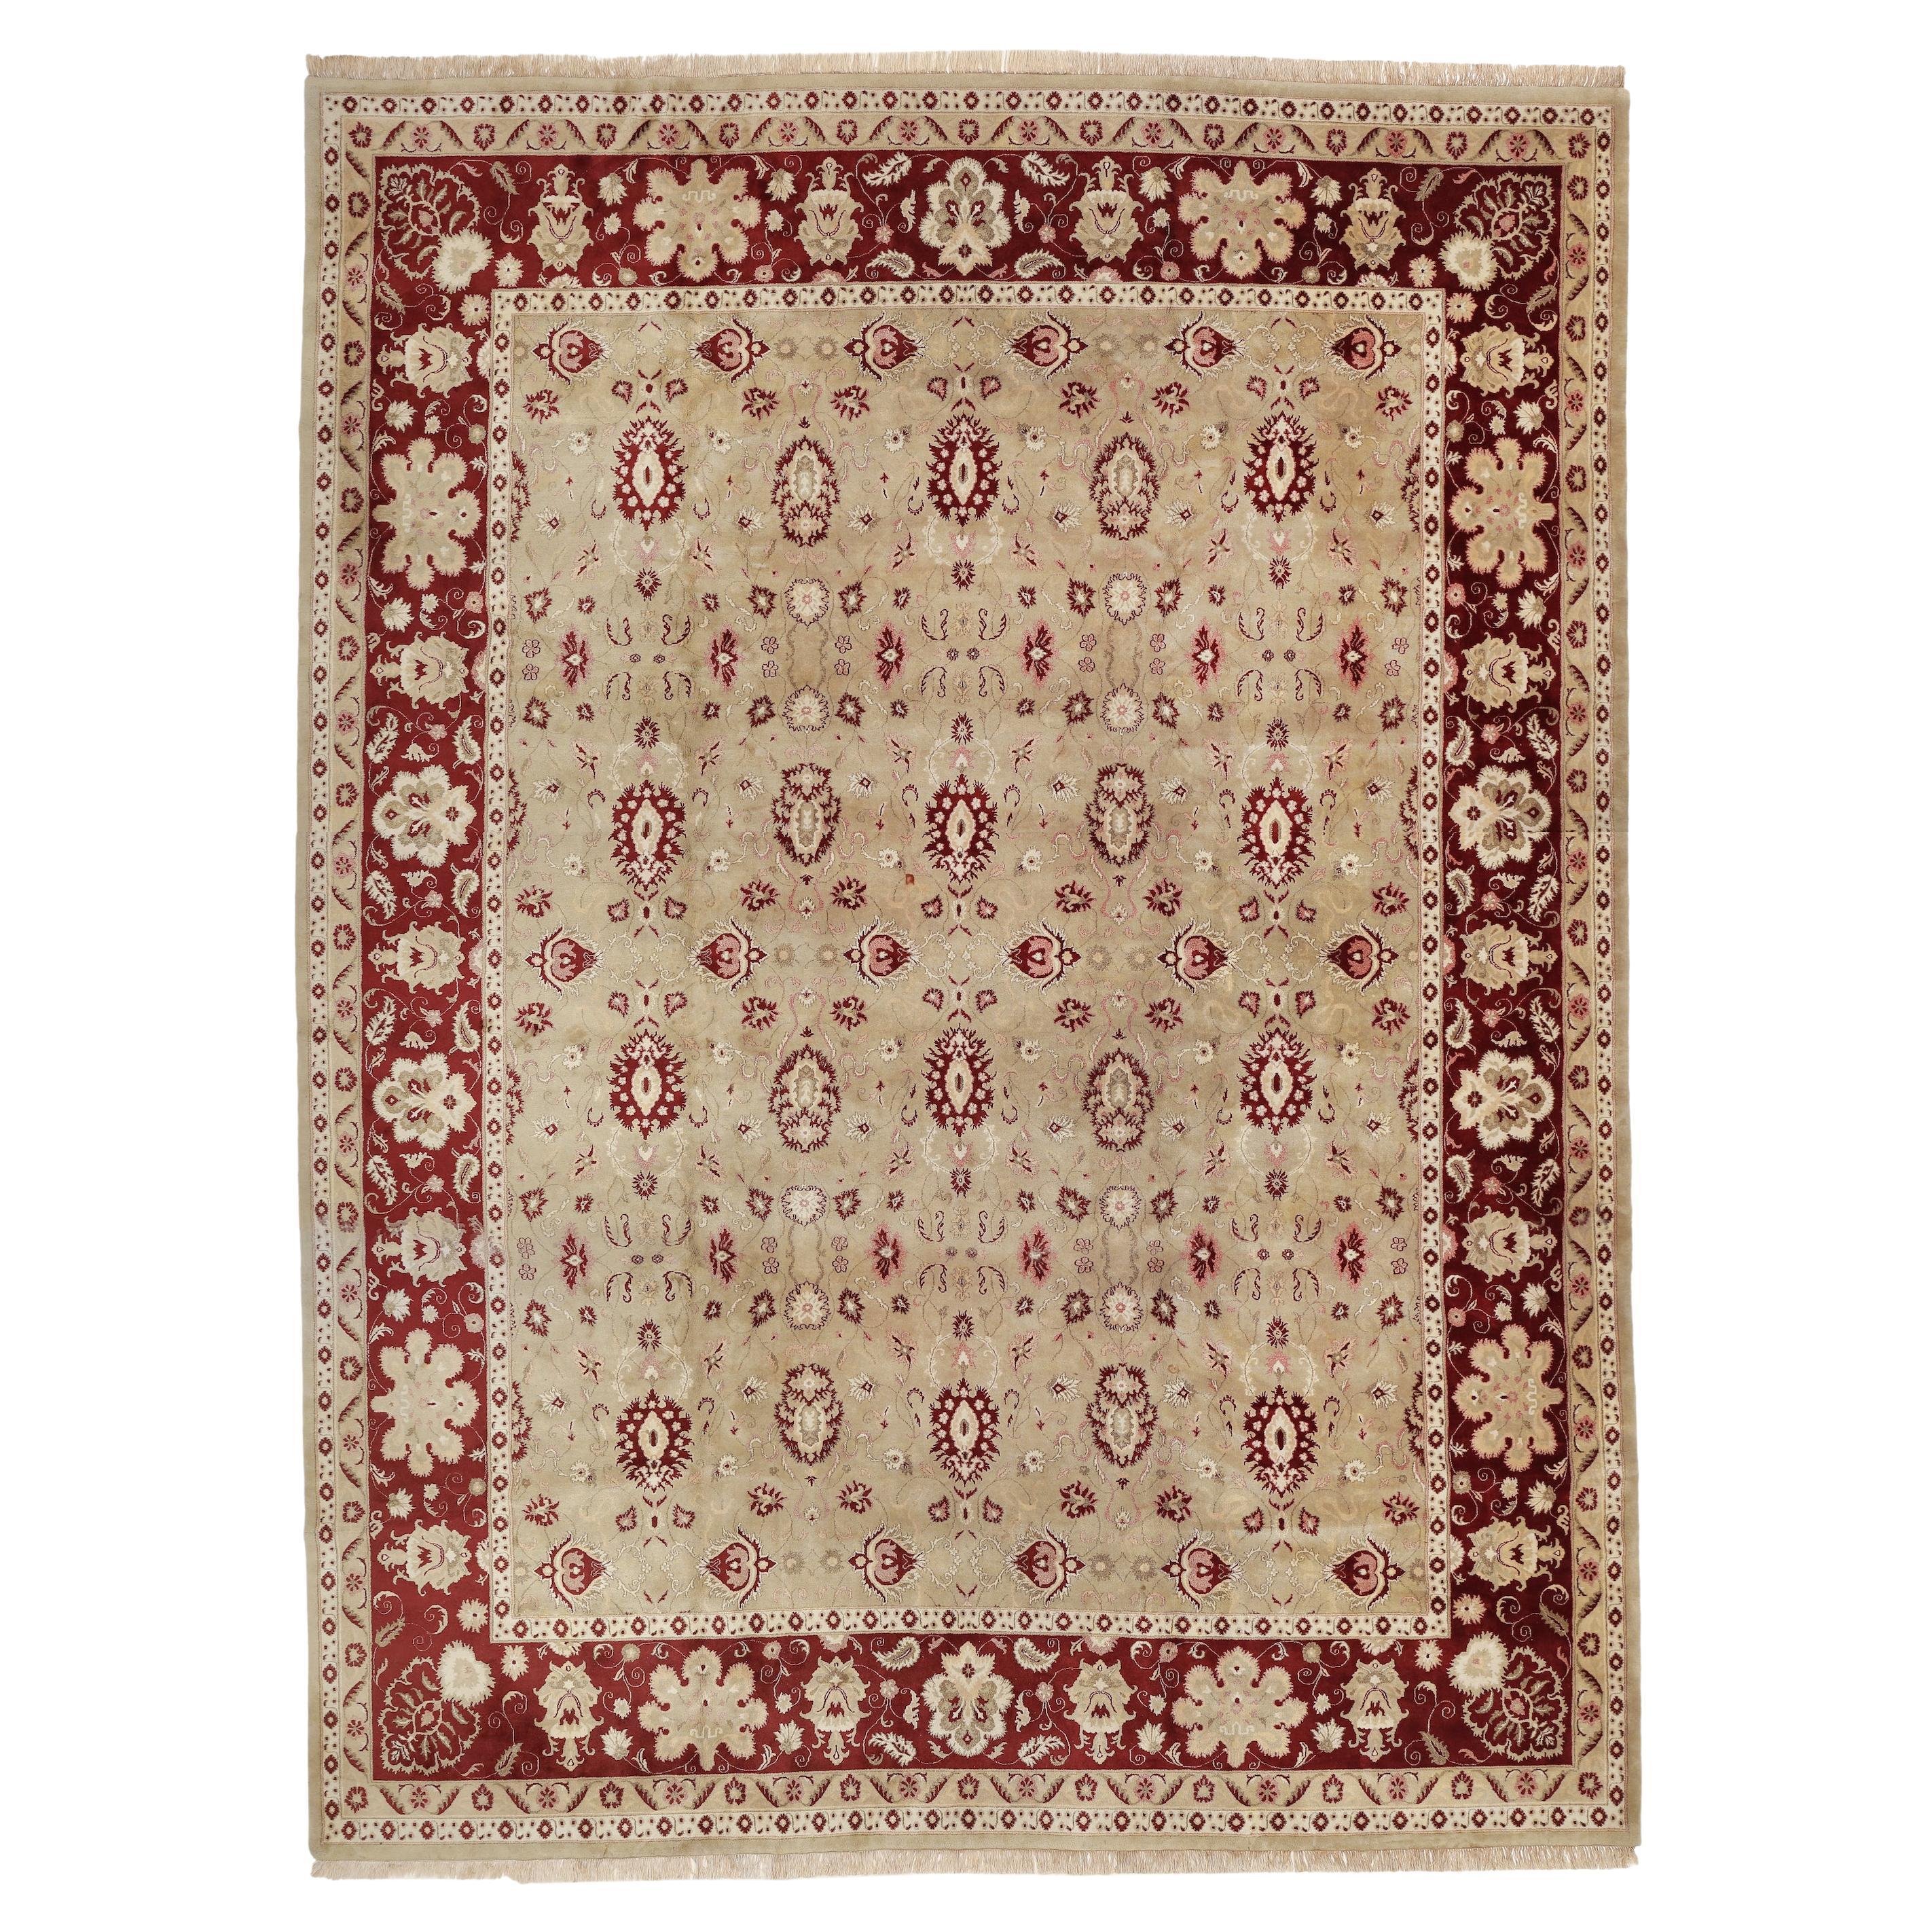 Übergroßer Vintage Celadon Grüner Agra-Teppich im All-Over-Design mit rubinroter Umrandung